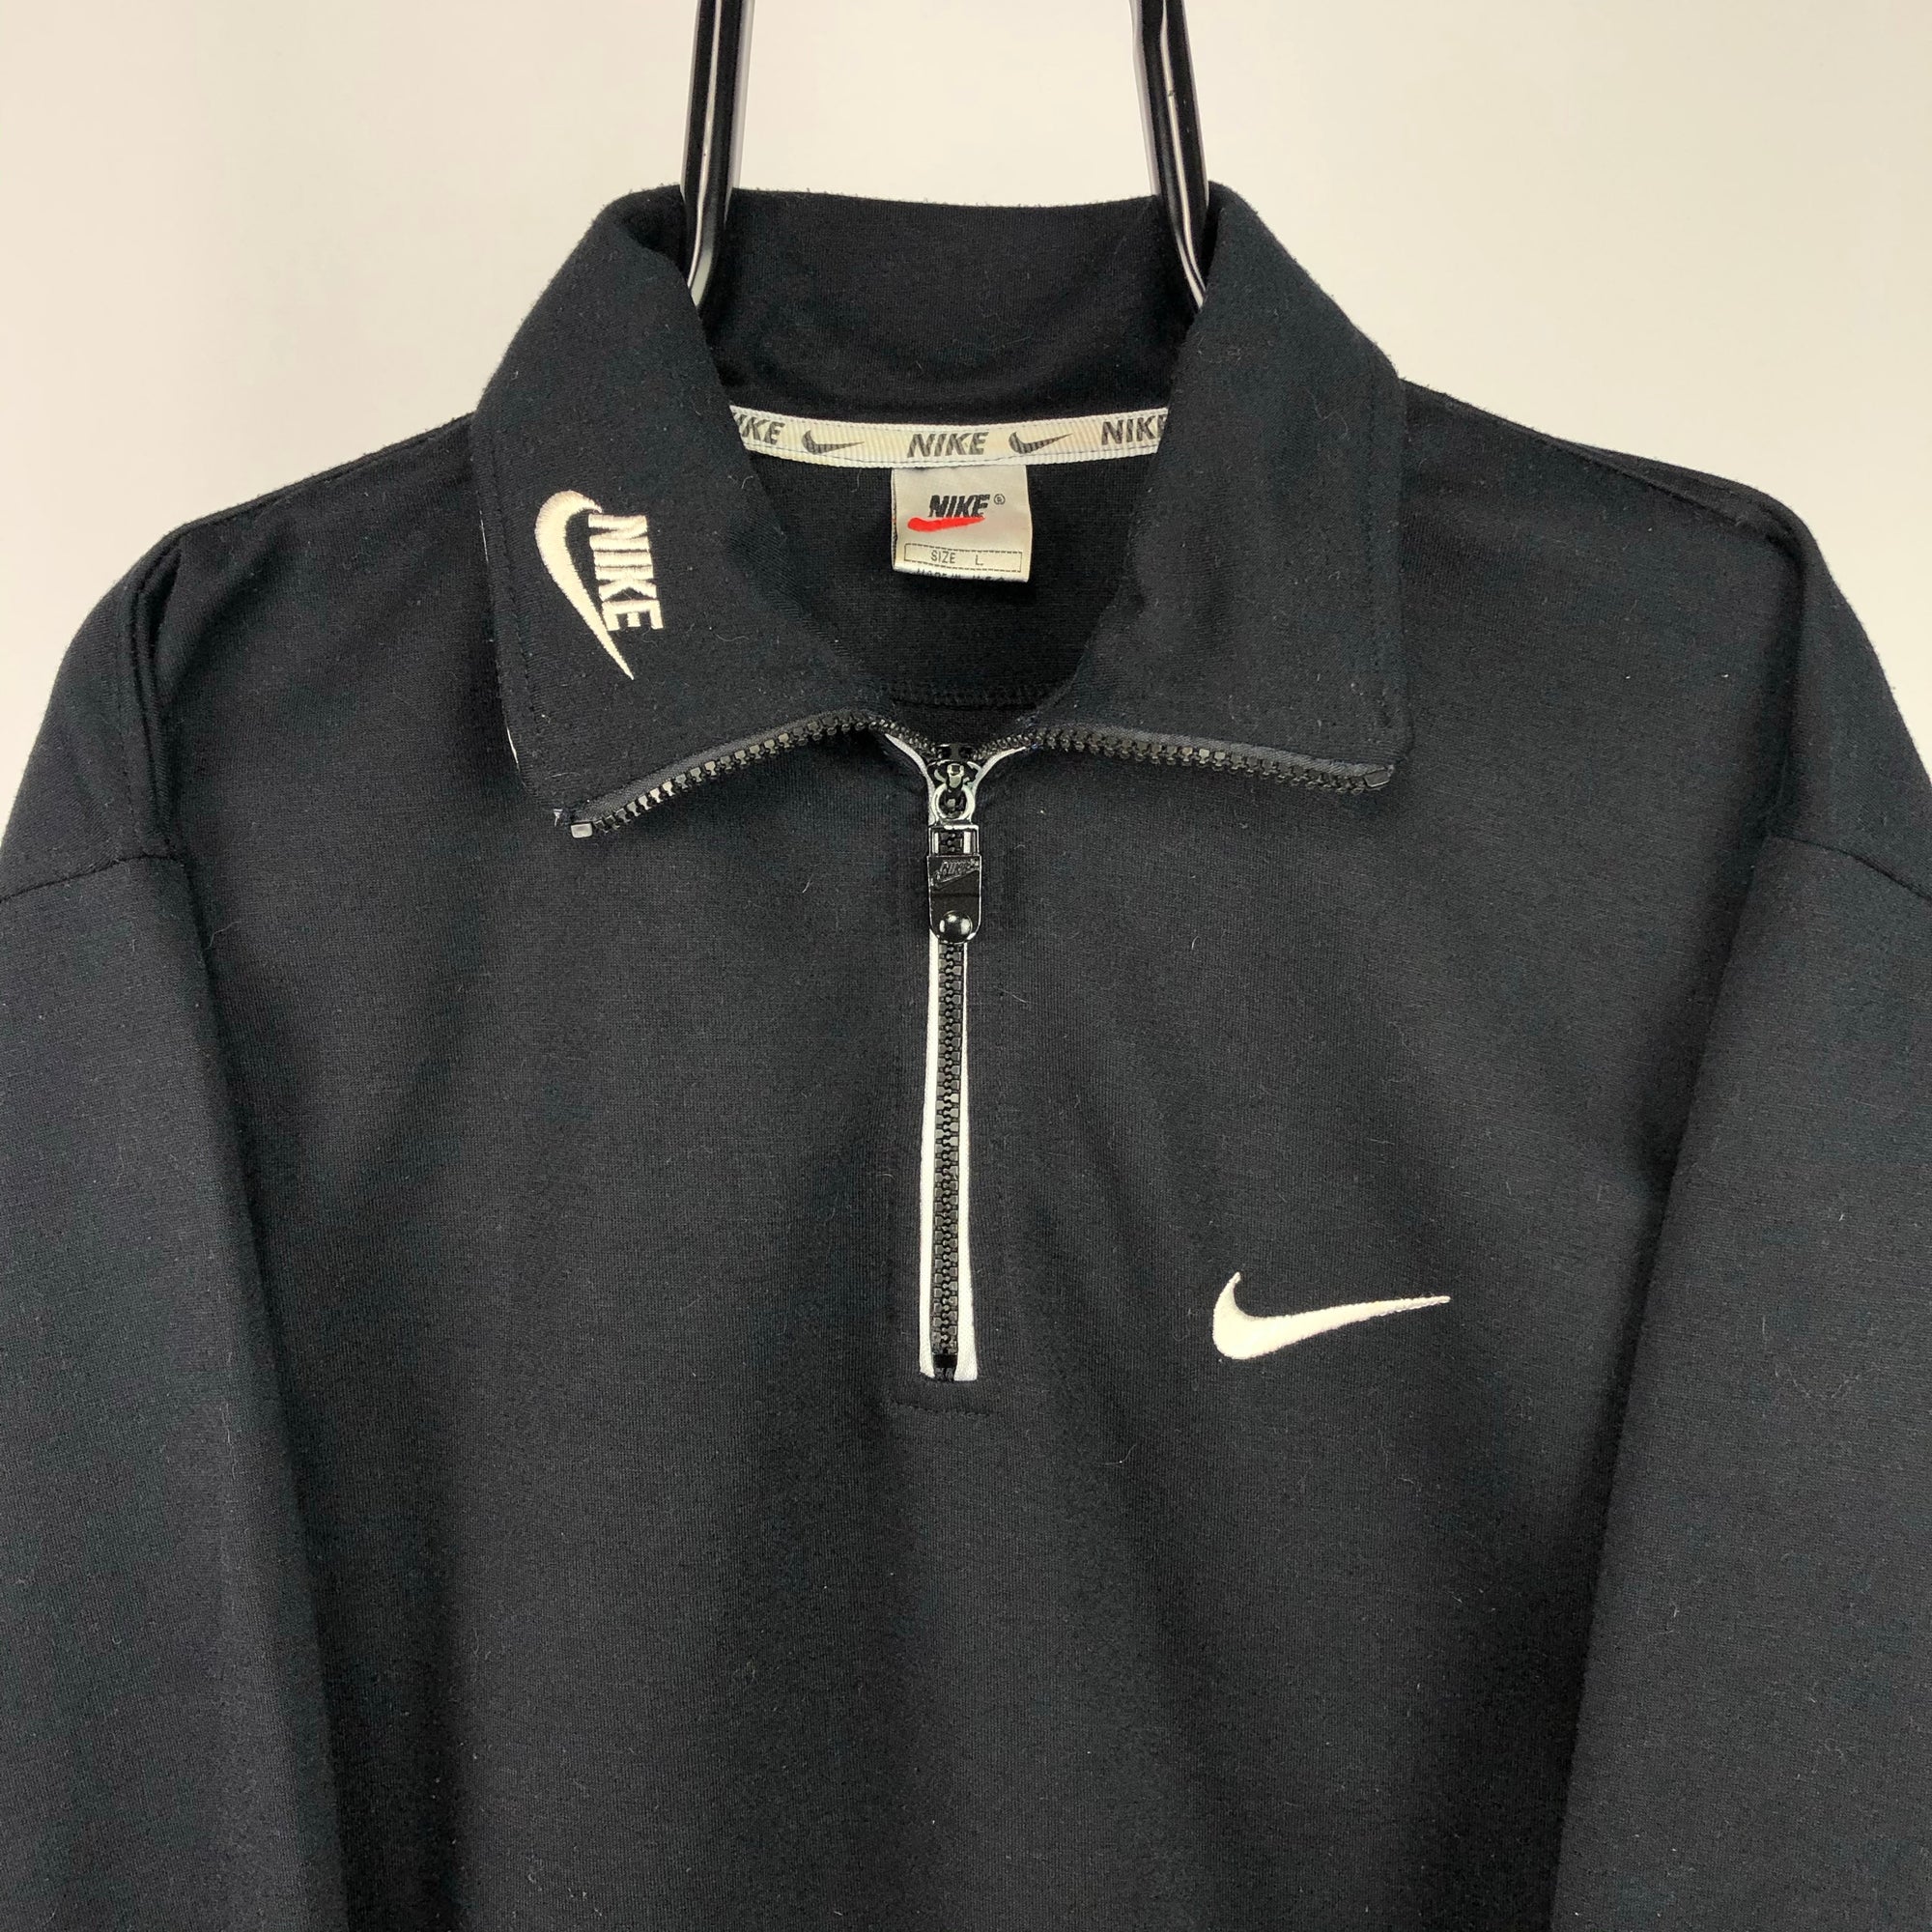 Vintage Nike 1/4 Zip Sweatshirt in Black & White - Men’s Large/Women’s XL